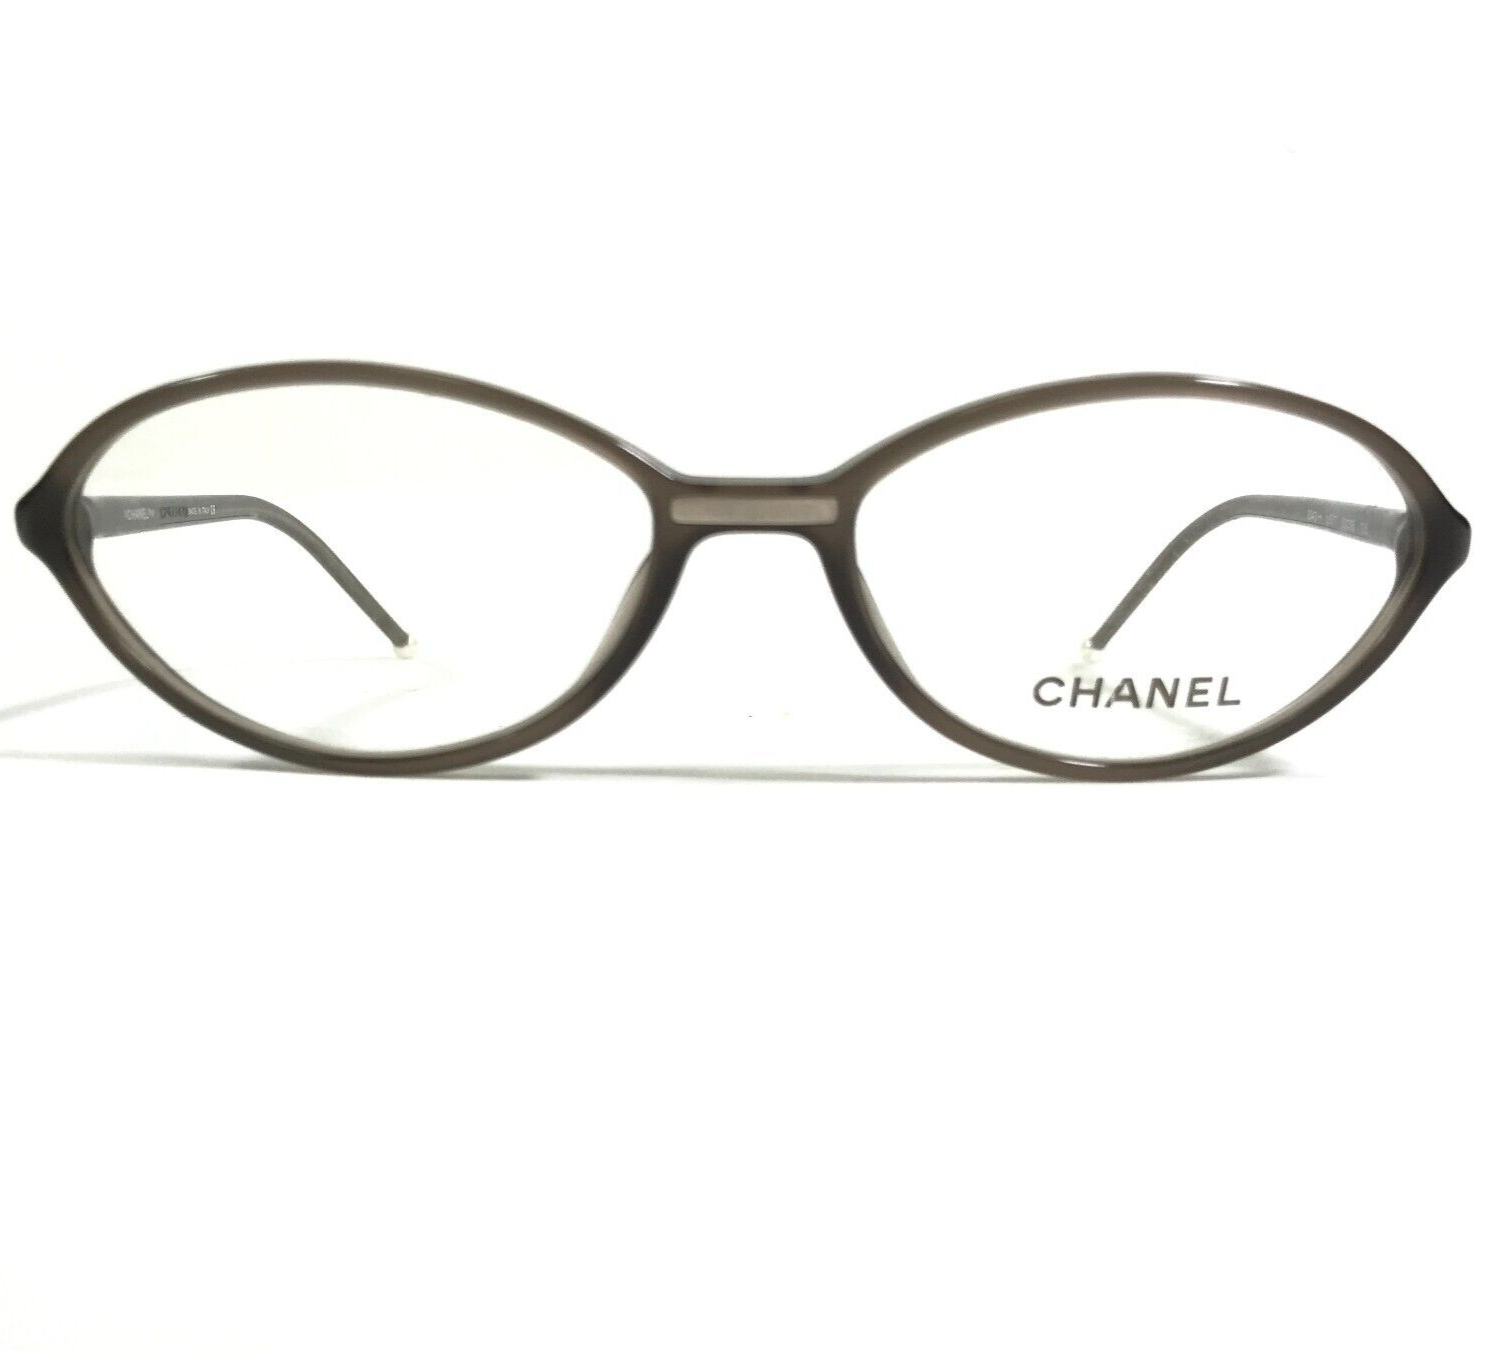 Primary image for Chanel Eyeglasses Frames 3043-H c.677 Brown Round Oval Full Rim 53-16-135